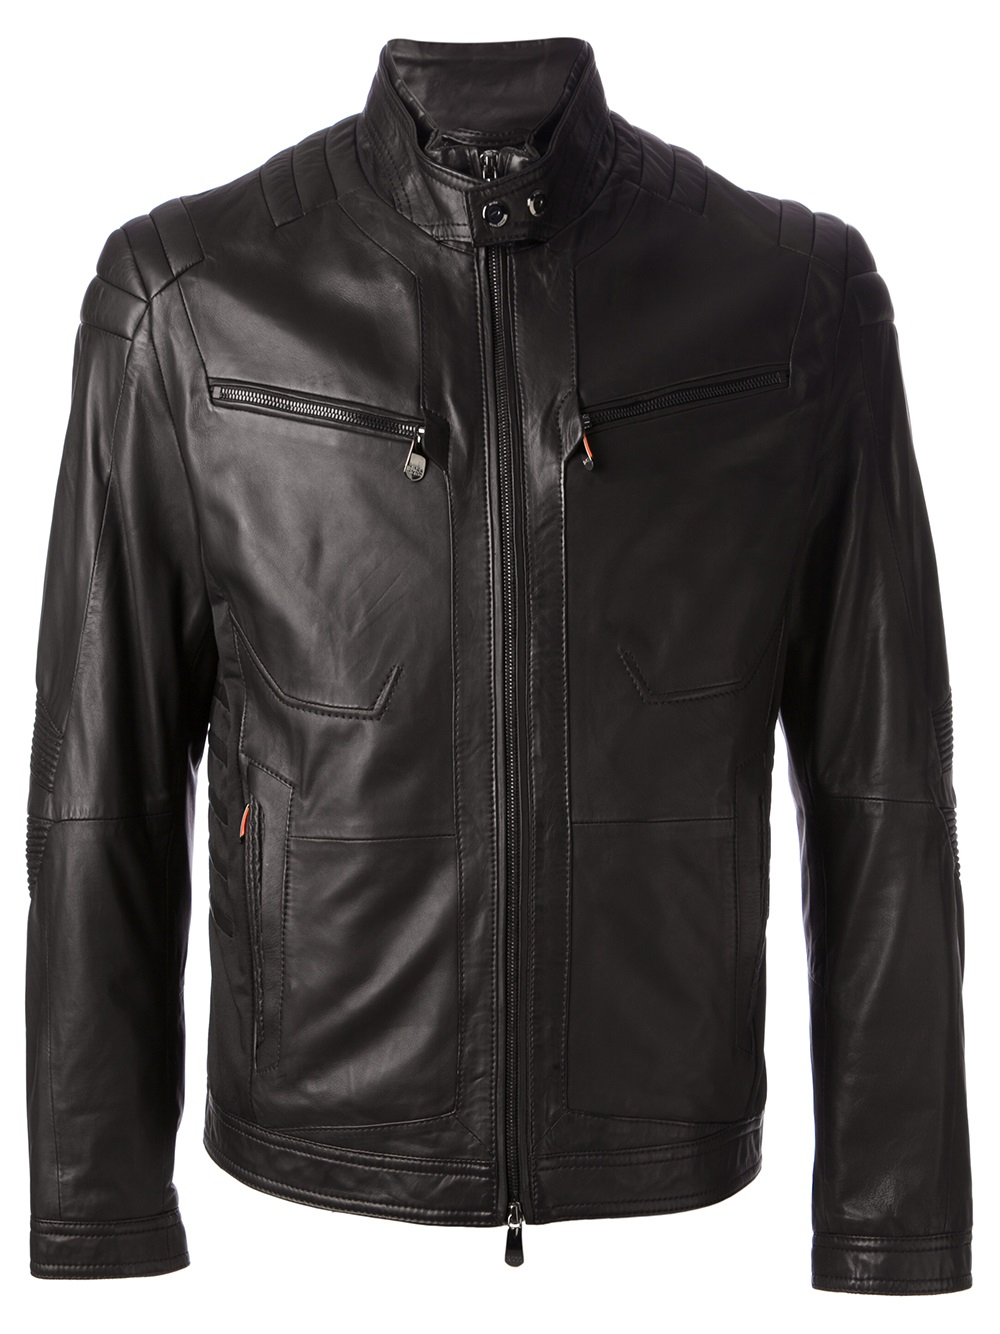 BOSS by Hugo Boss Nogaro Leather Jacket in Black for Men - Lyst